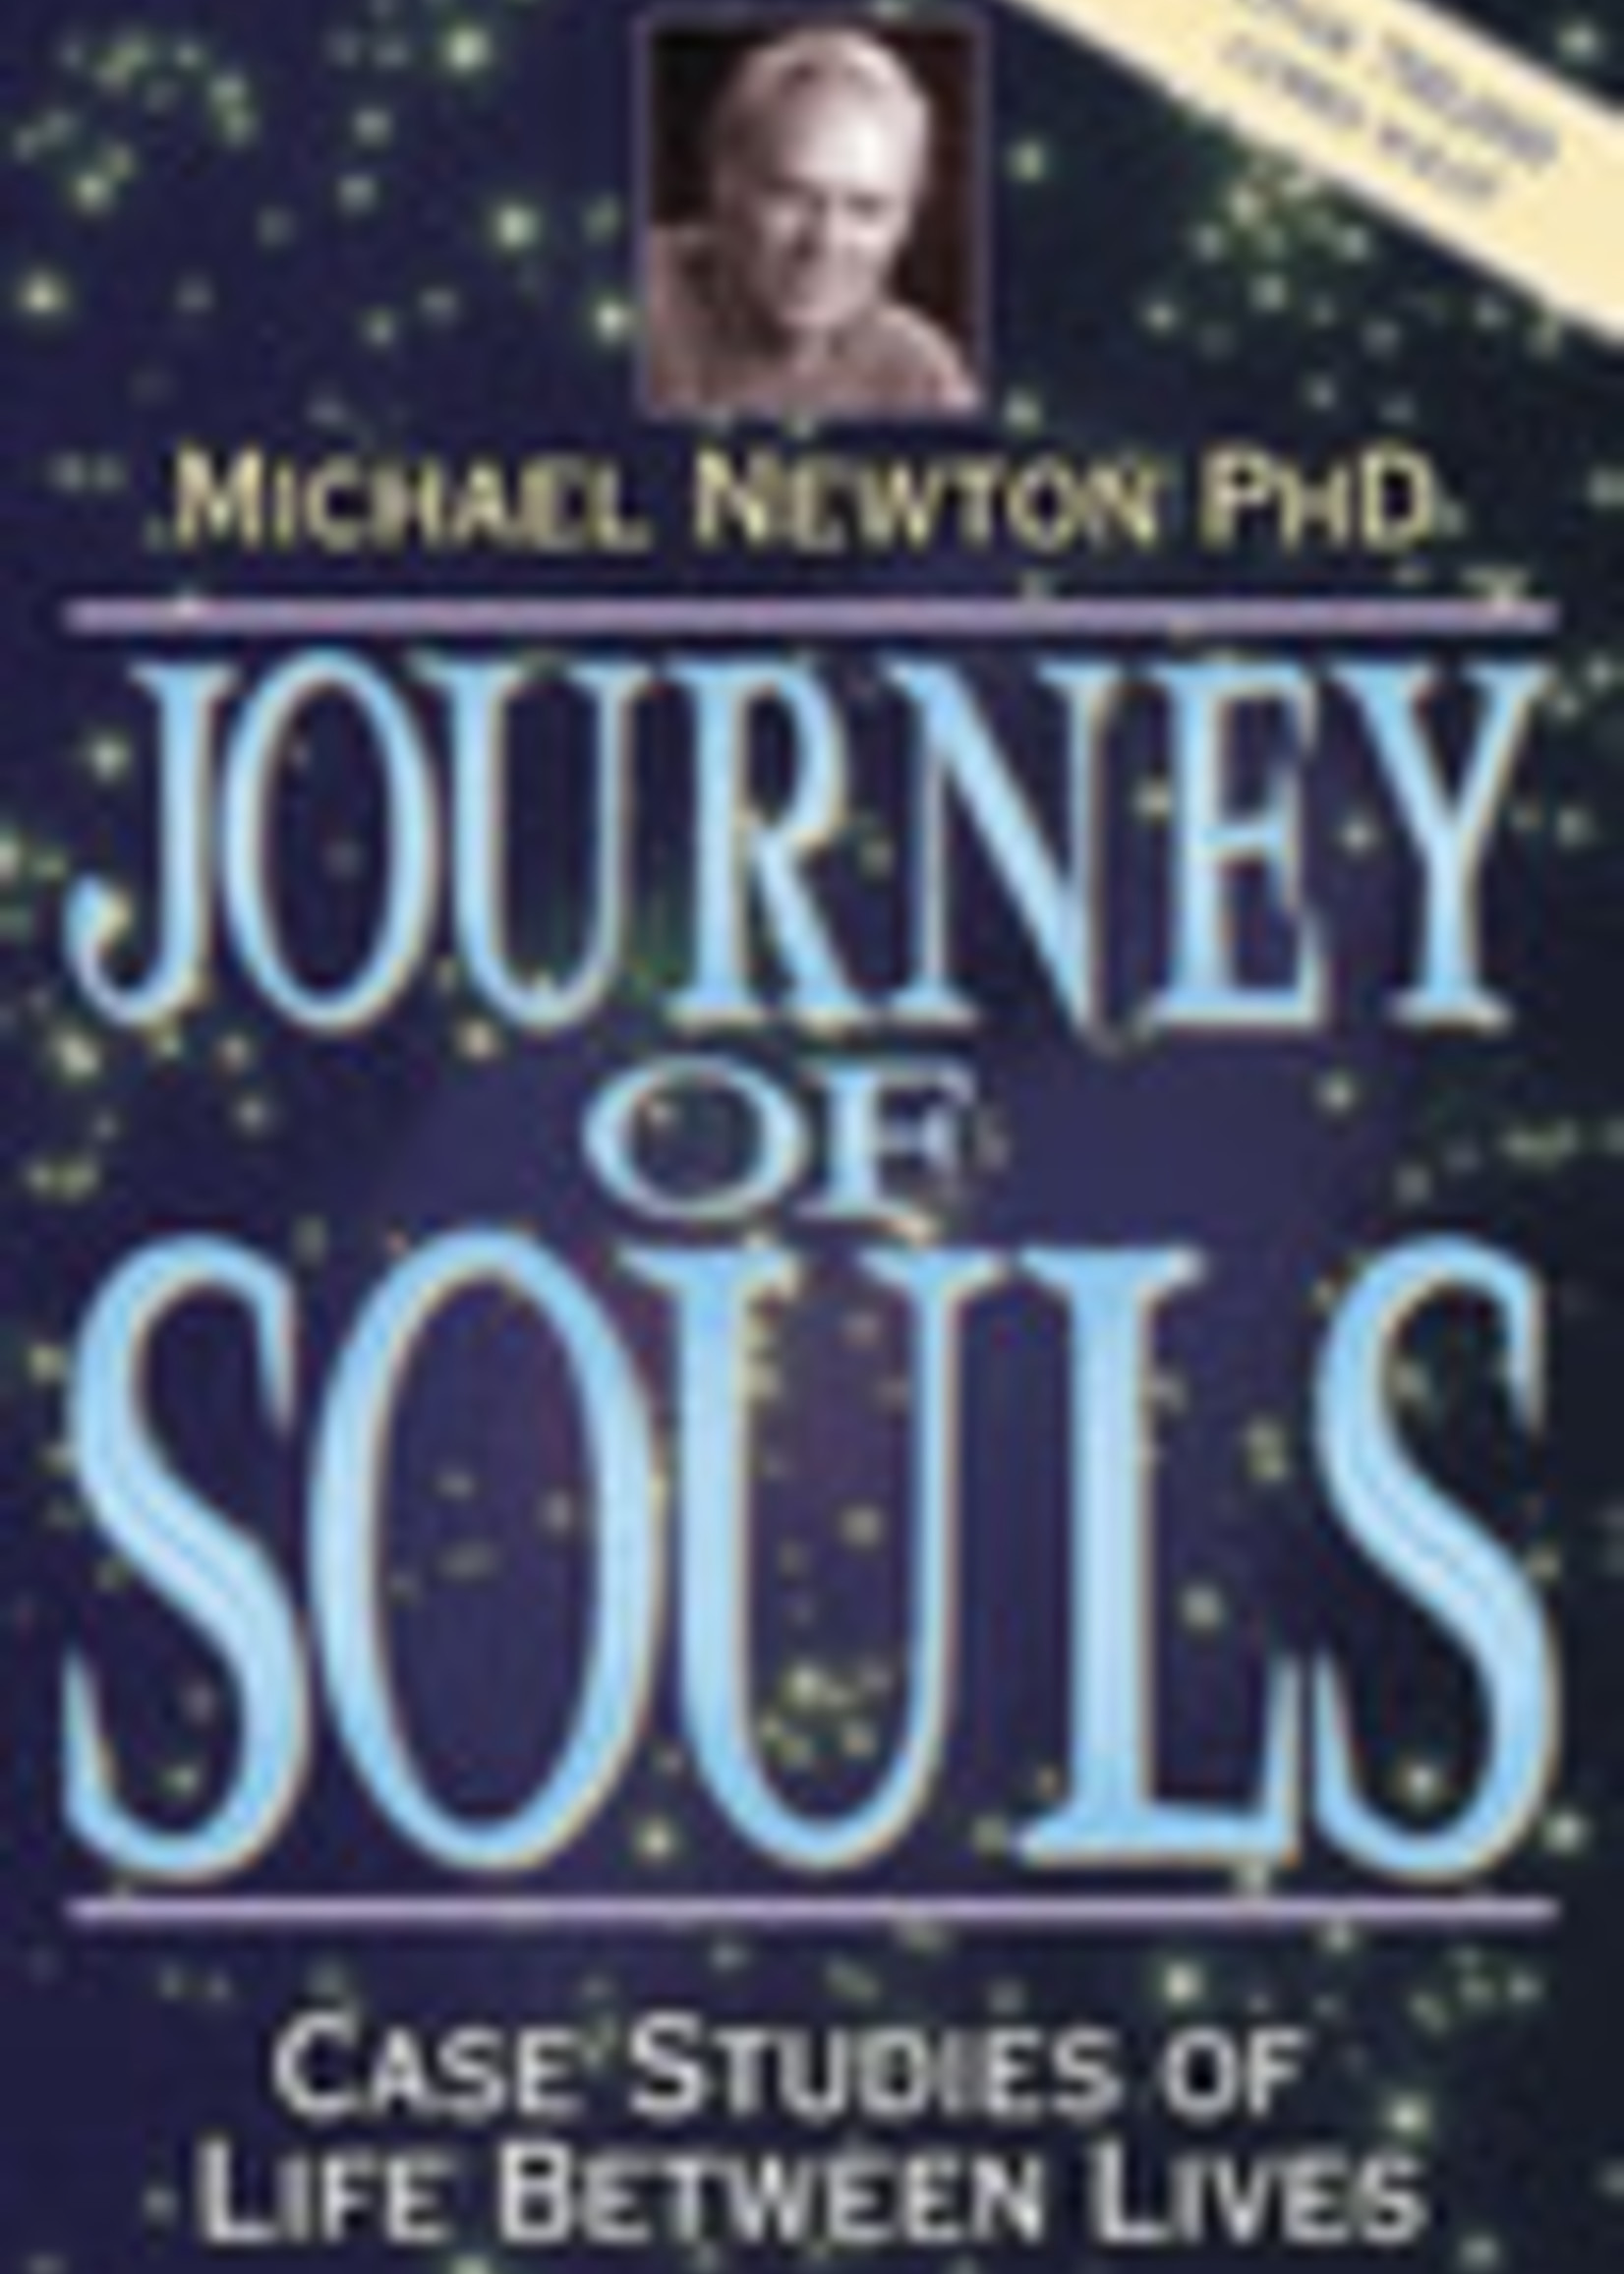 Journey of Souls